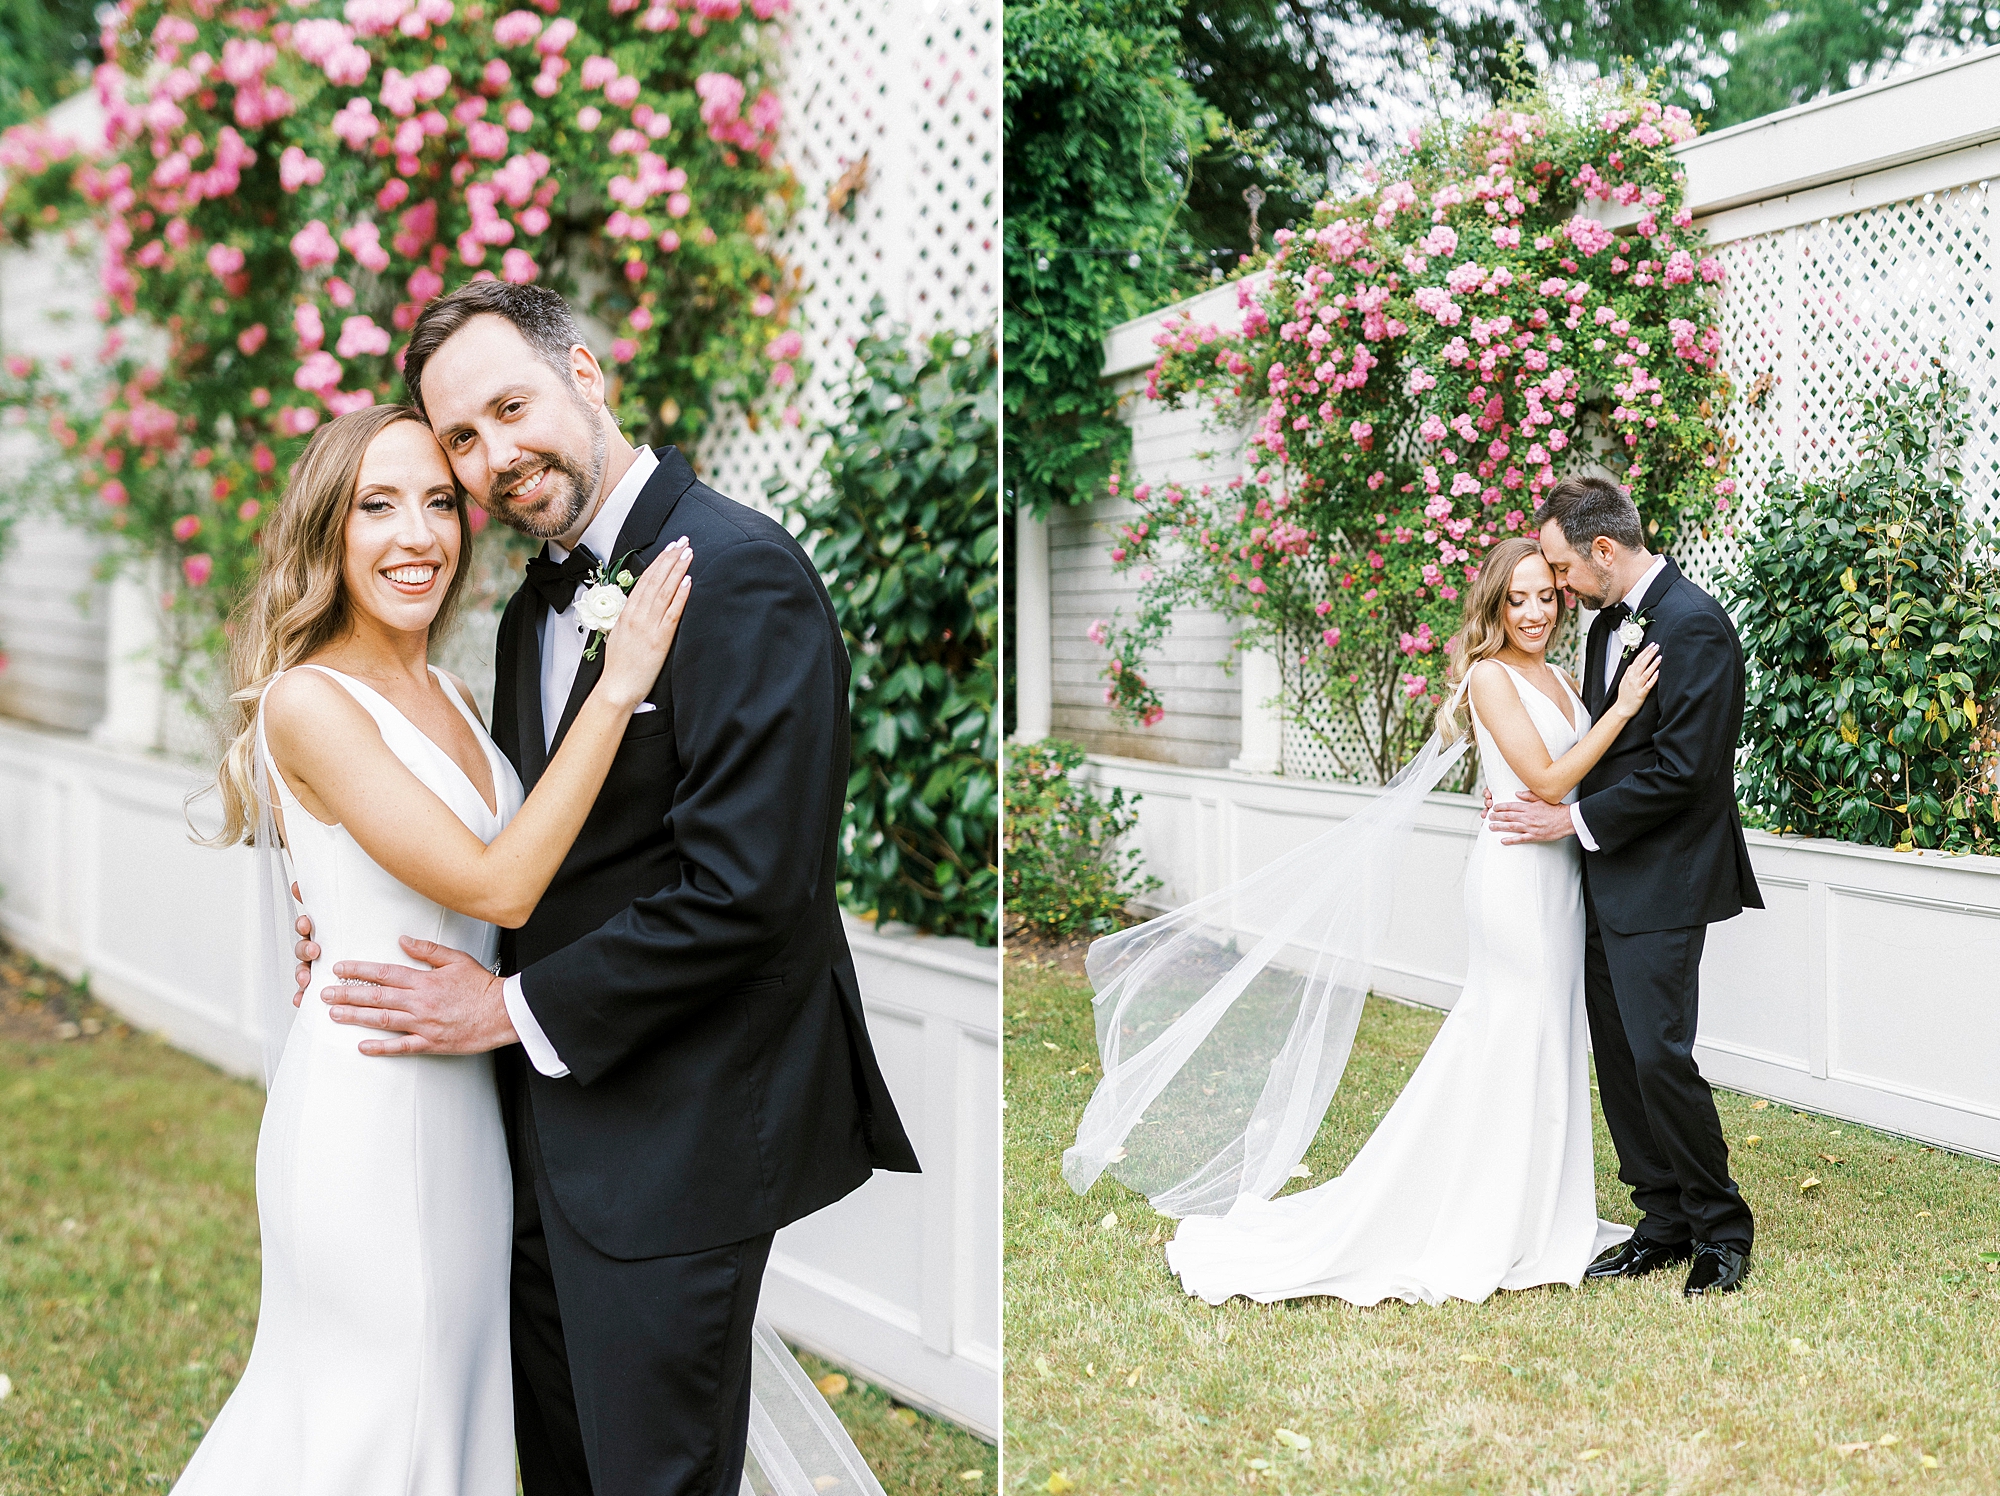 newlyweds hug by pink flowers in garden of Separk Mansion